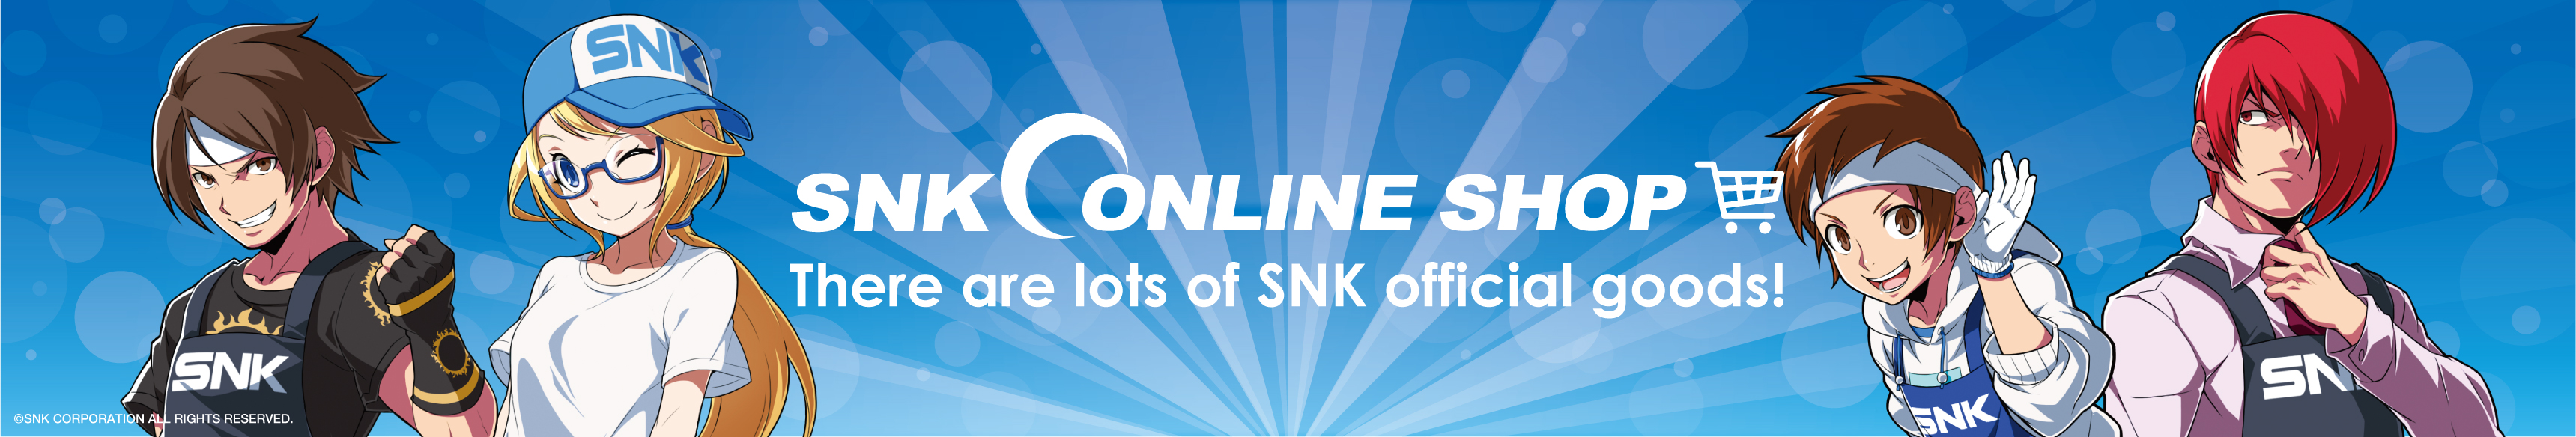 snk online shop